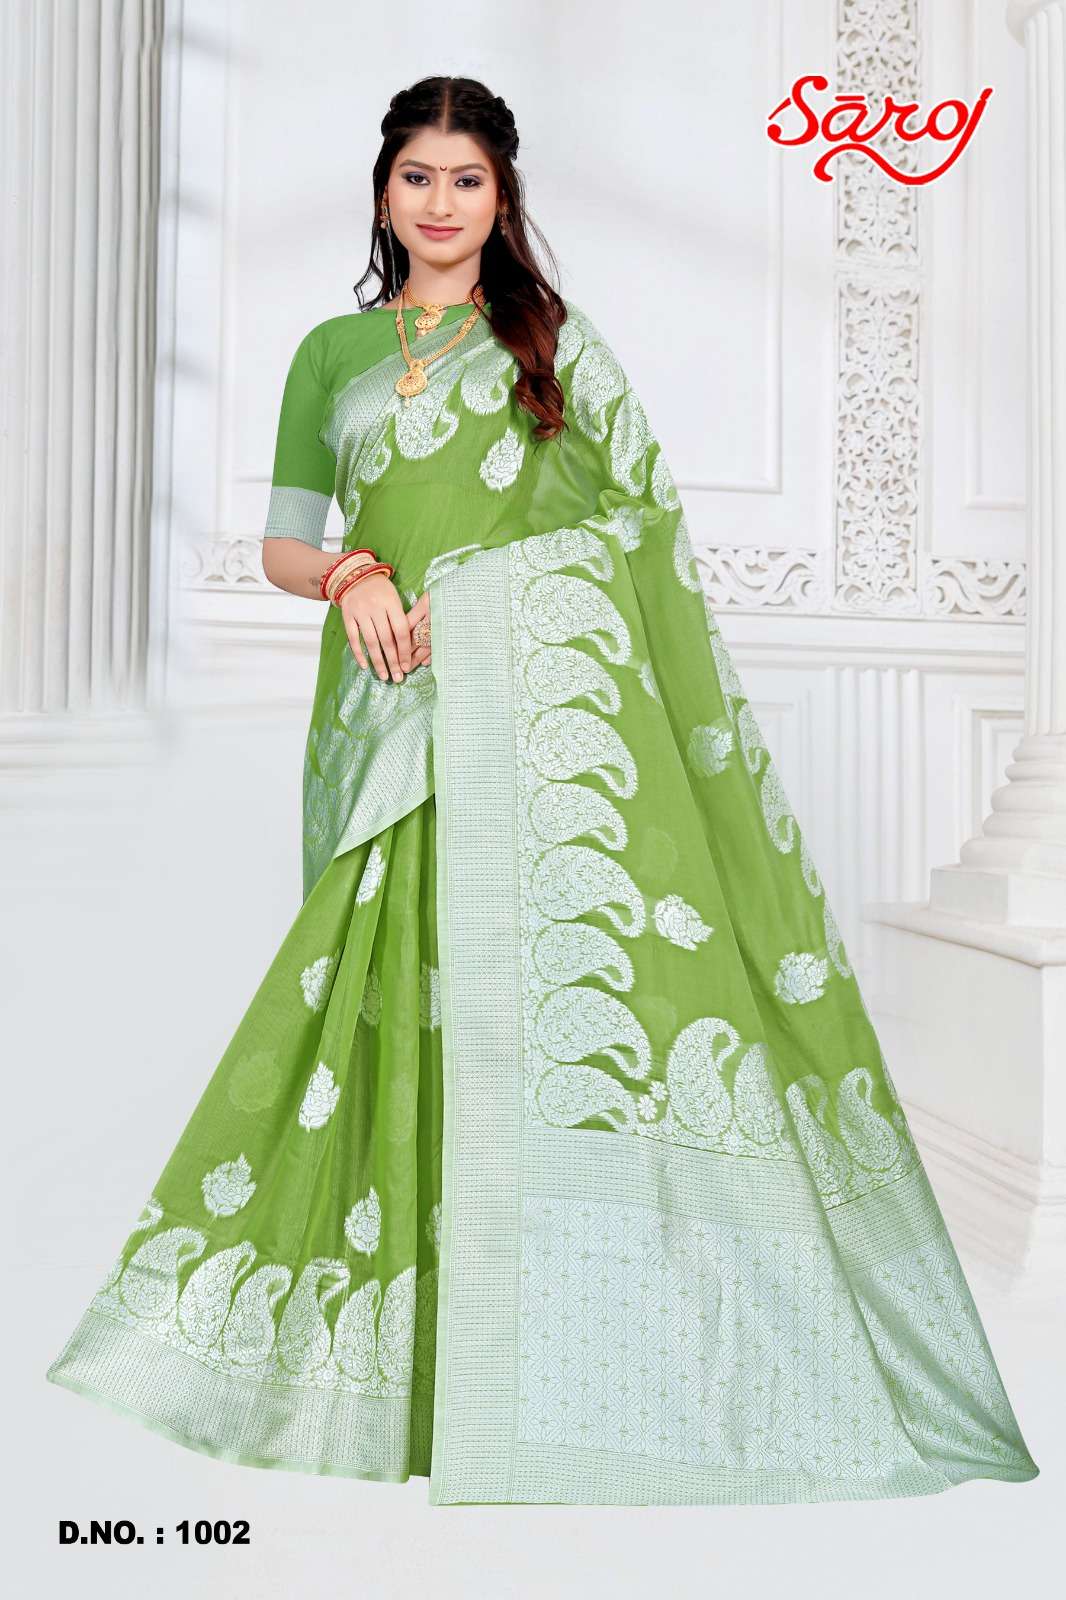 Saroj textile presents Madhuvanti vol-1 Cotton Designer sarees catalogue